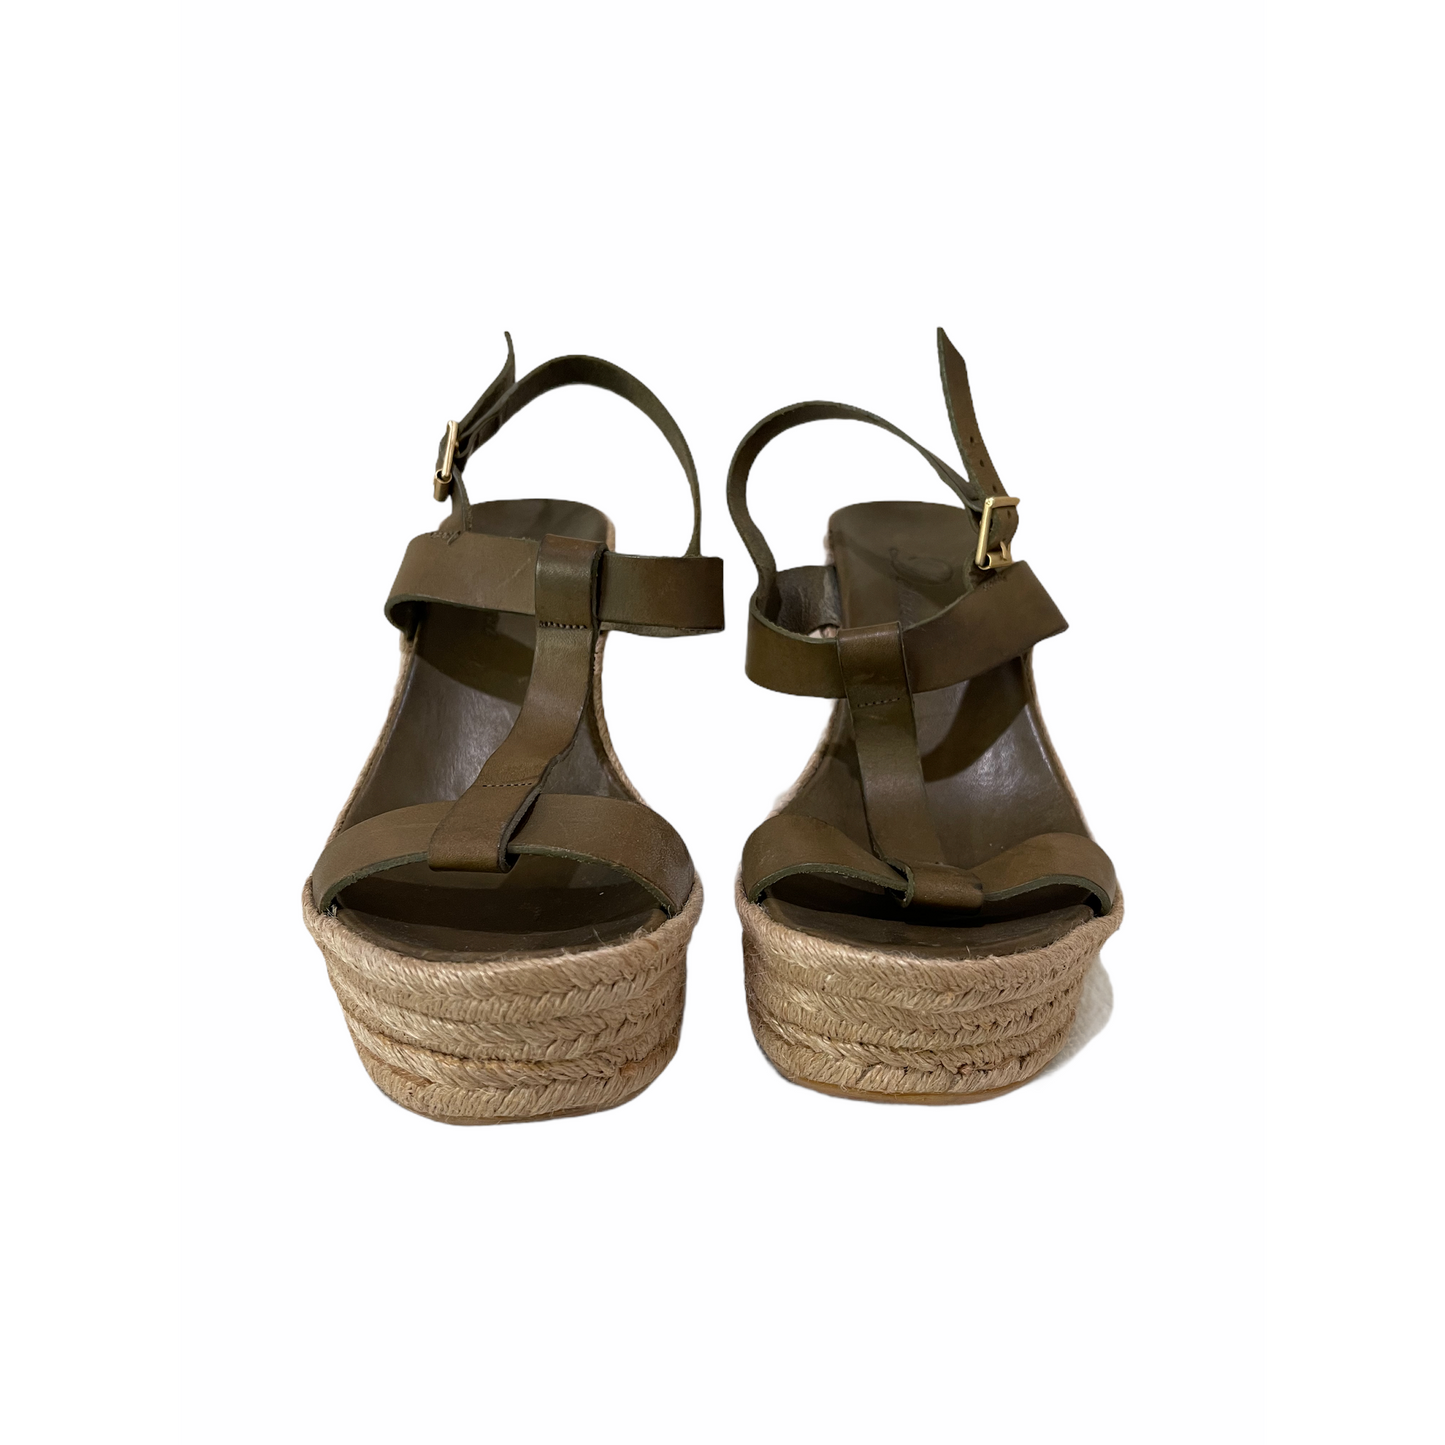 Wedged Heels- Olive Green Color- T-Strap Design -By Delam